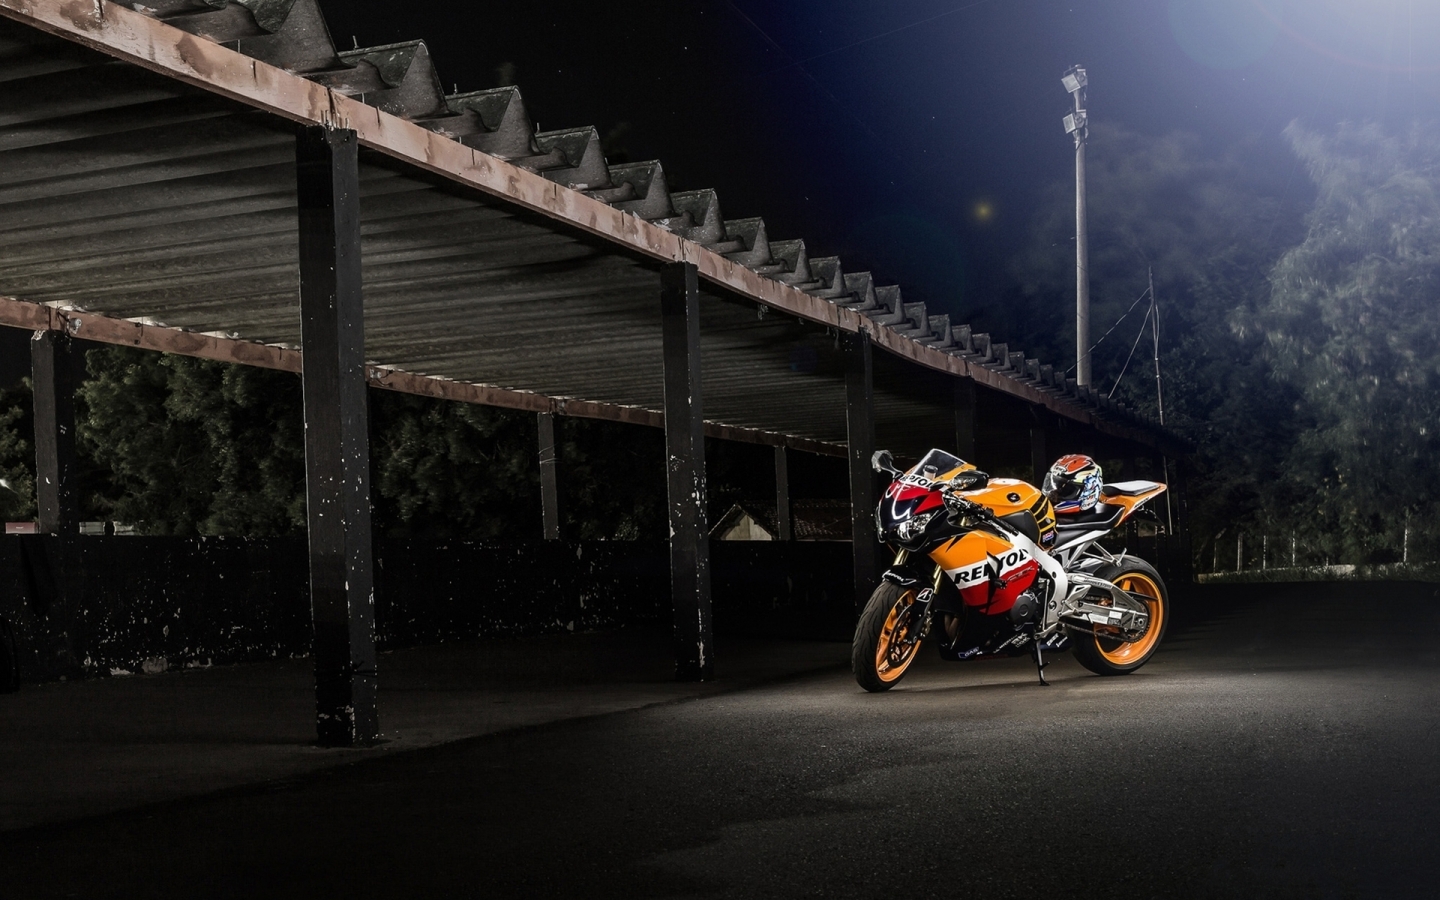 2012 Honda CBR 1000 RR for 1440 x 900 widescreen resolution